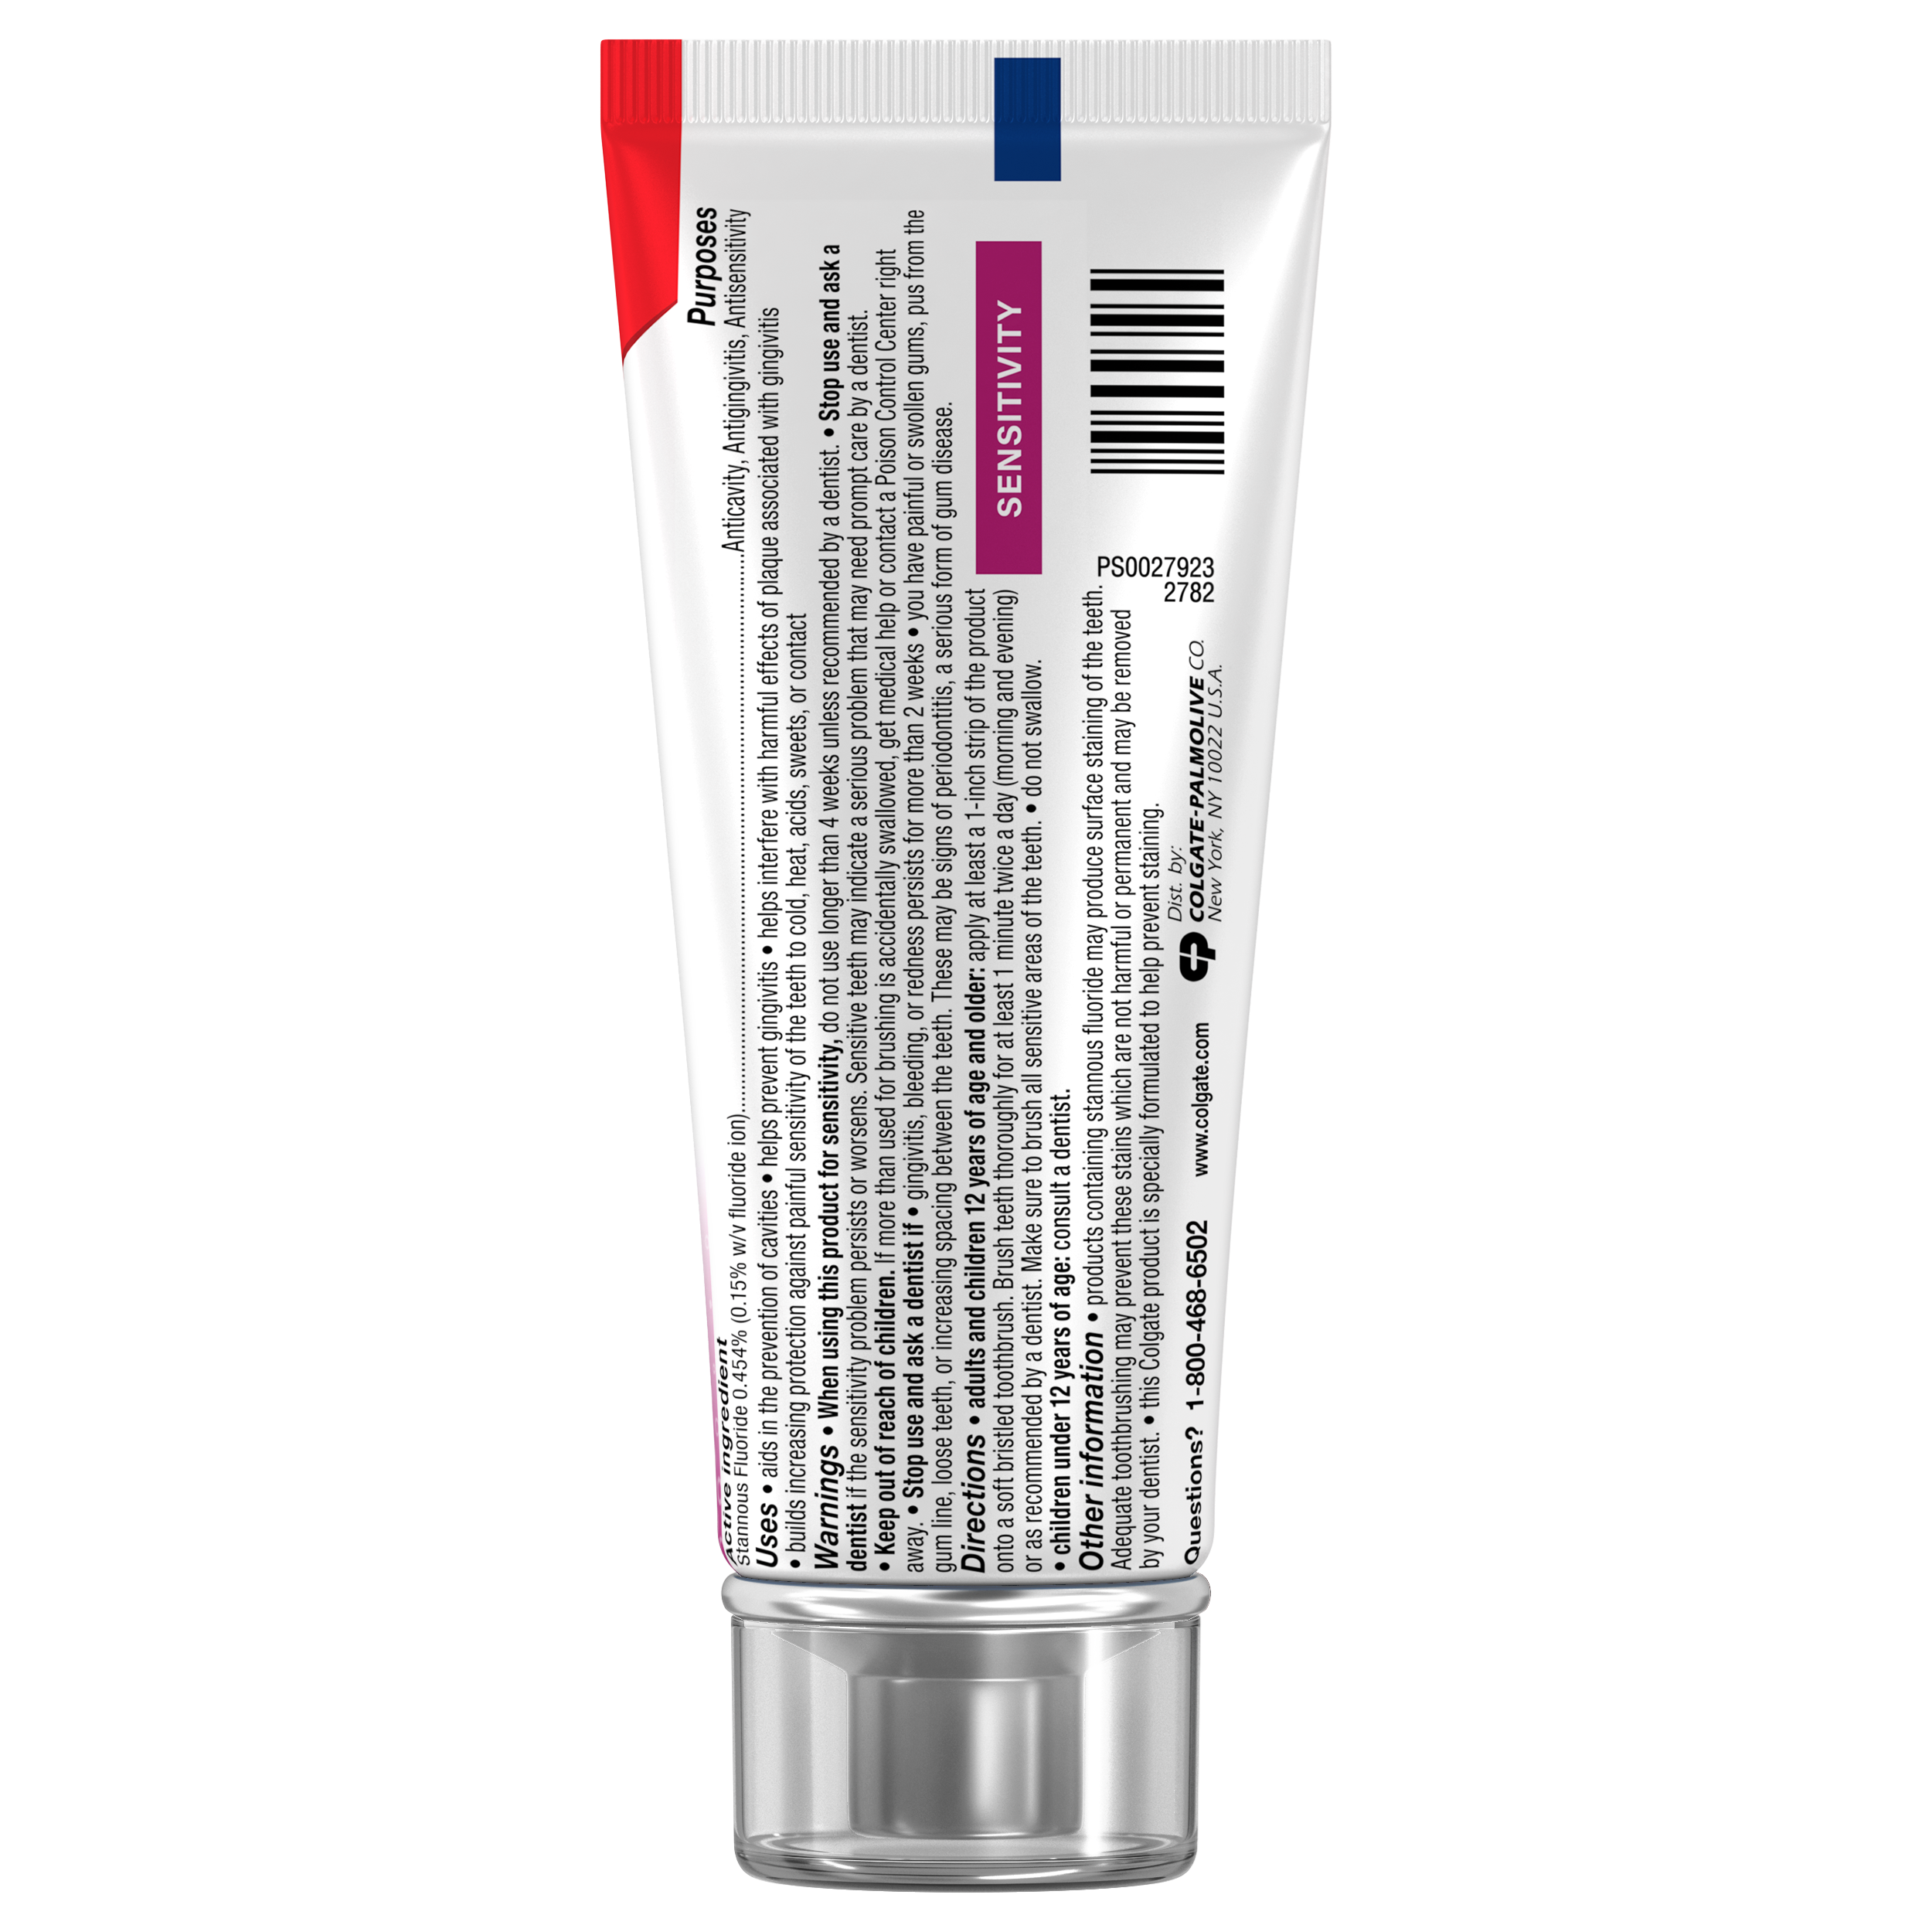 Colgate Renewal Sensitivity Gum Toothpaste Gel, Mint, 3 OZ Tube - image 3 of 5